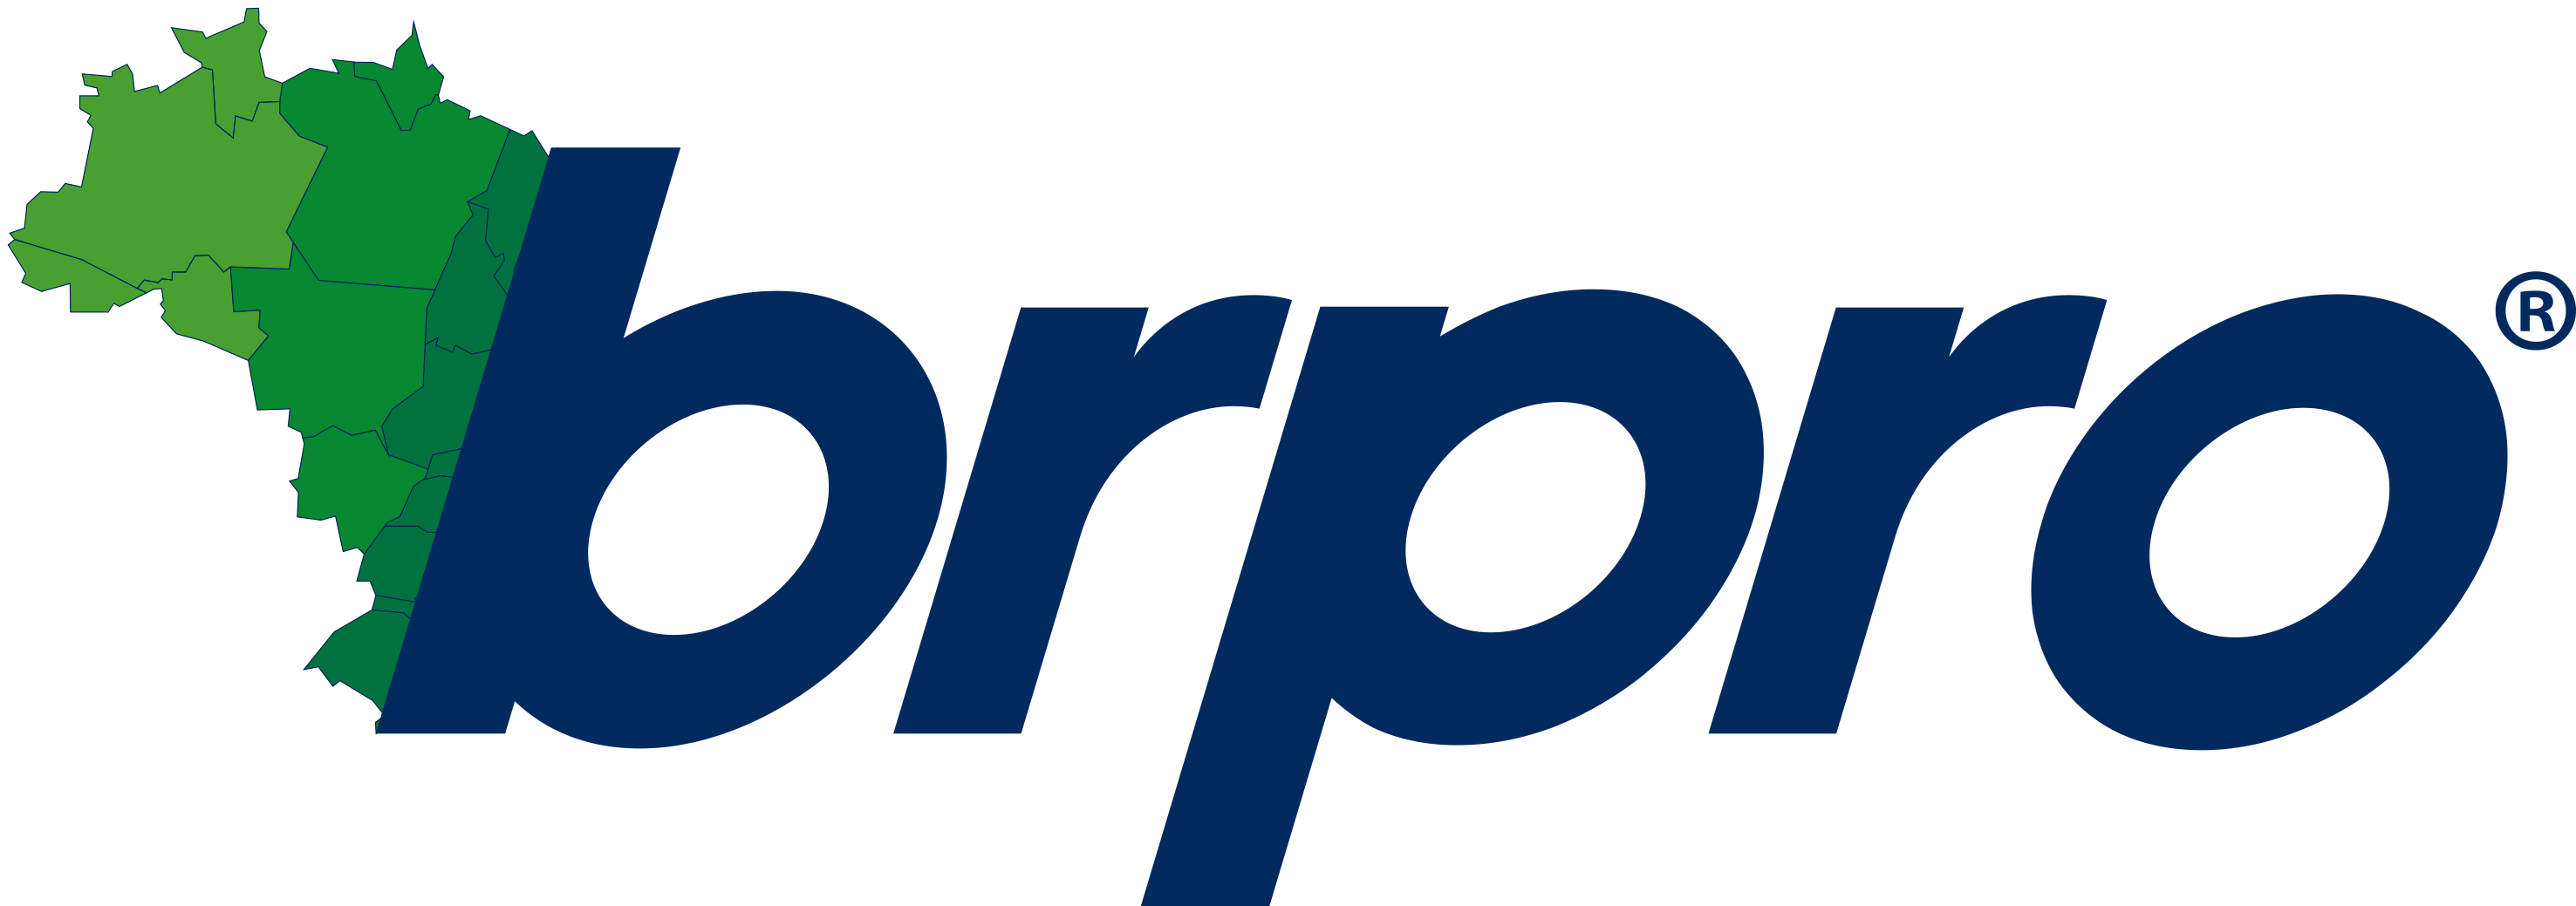 Logotipo_brpro